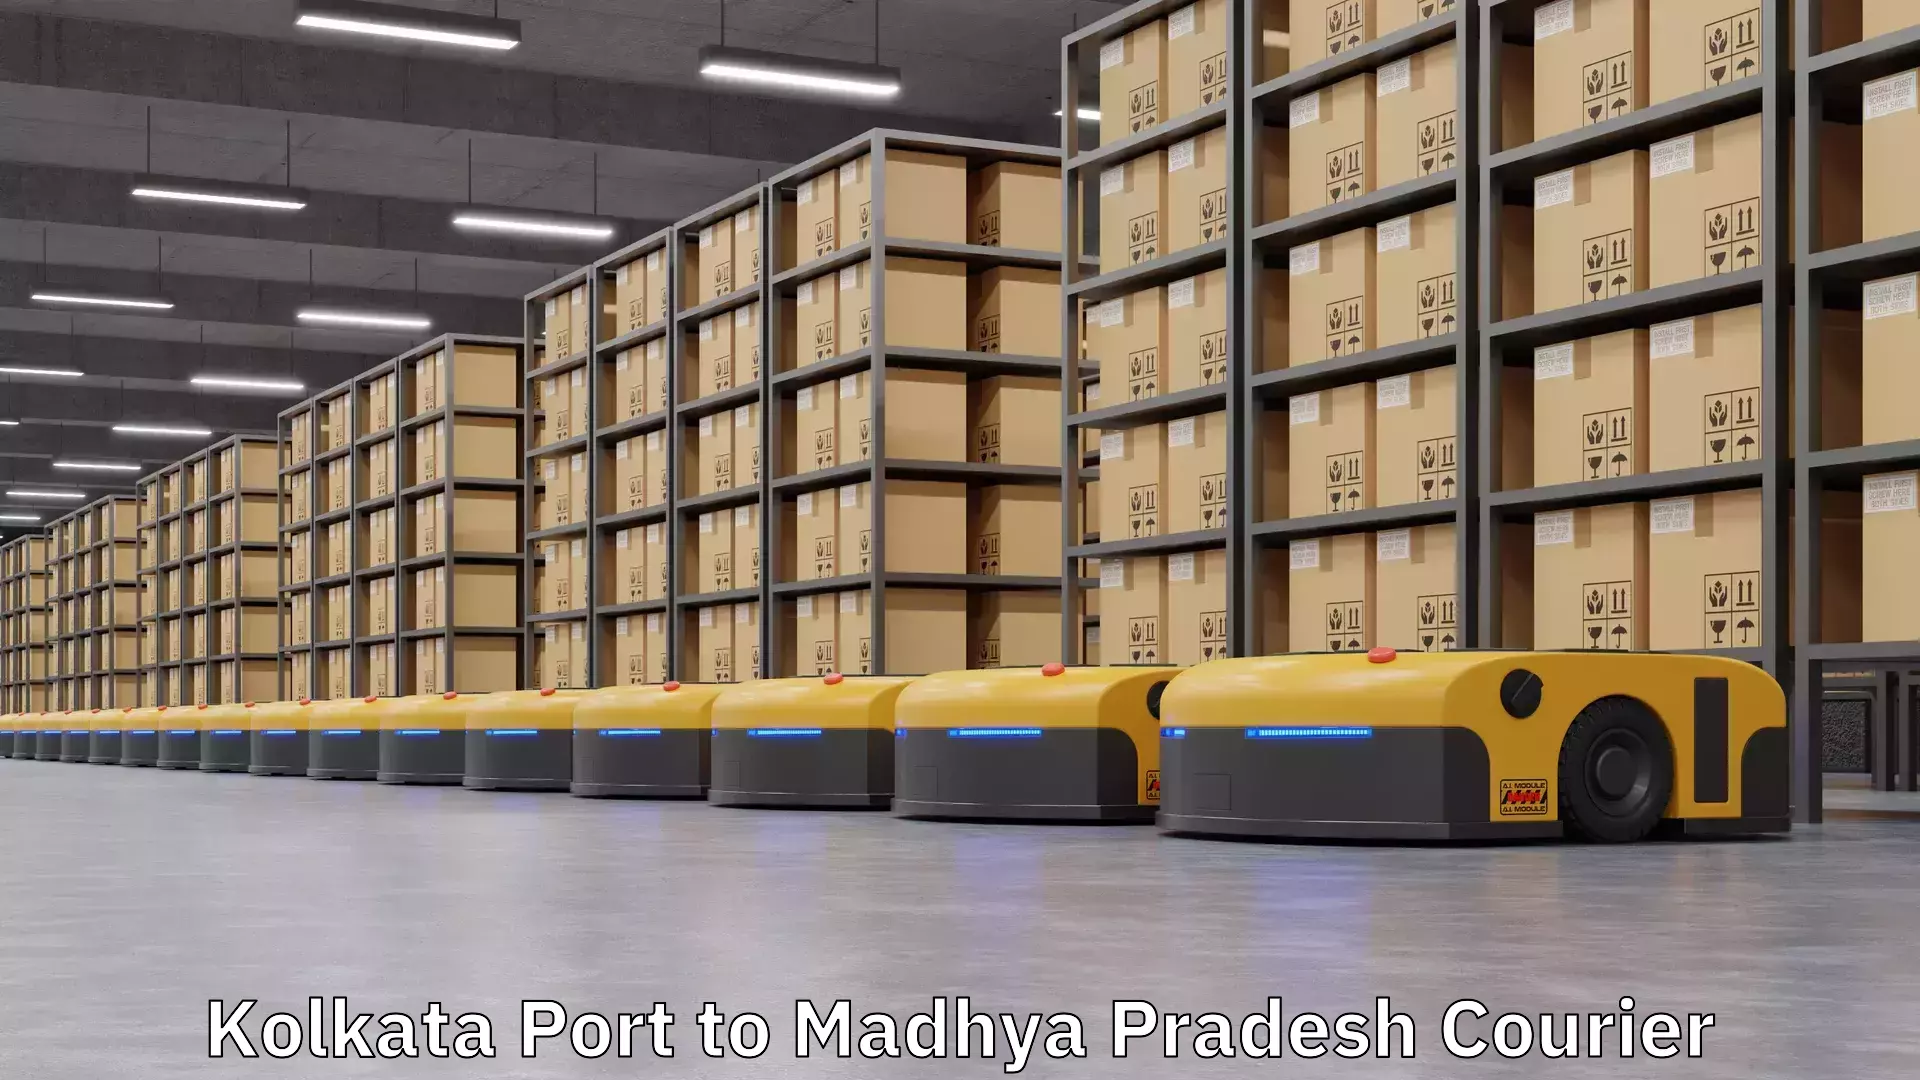 Doorstep delivery service Kolkata Port to Madhya Pradesh